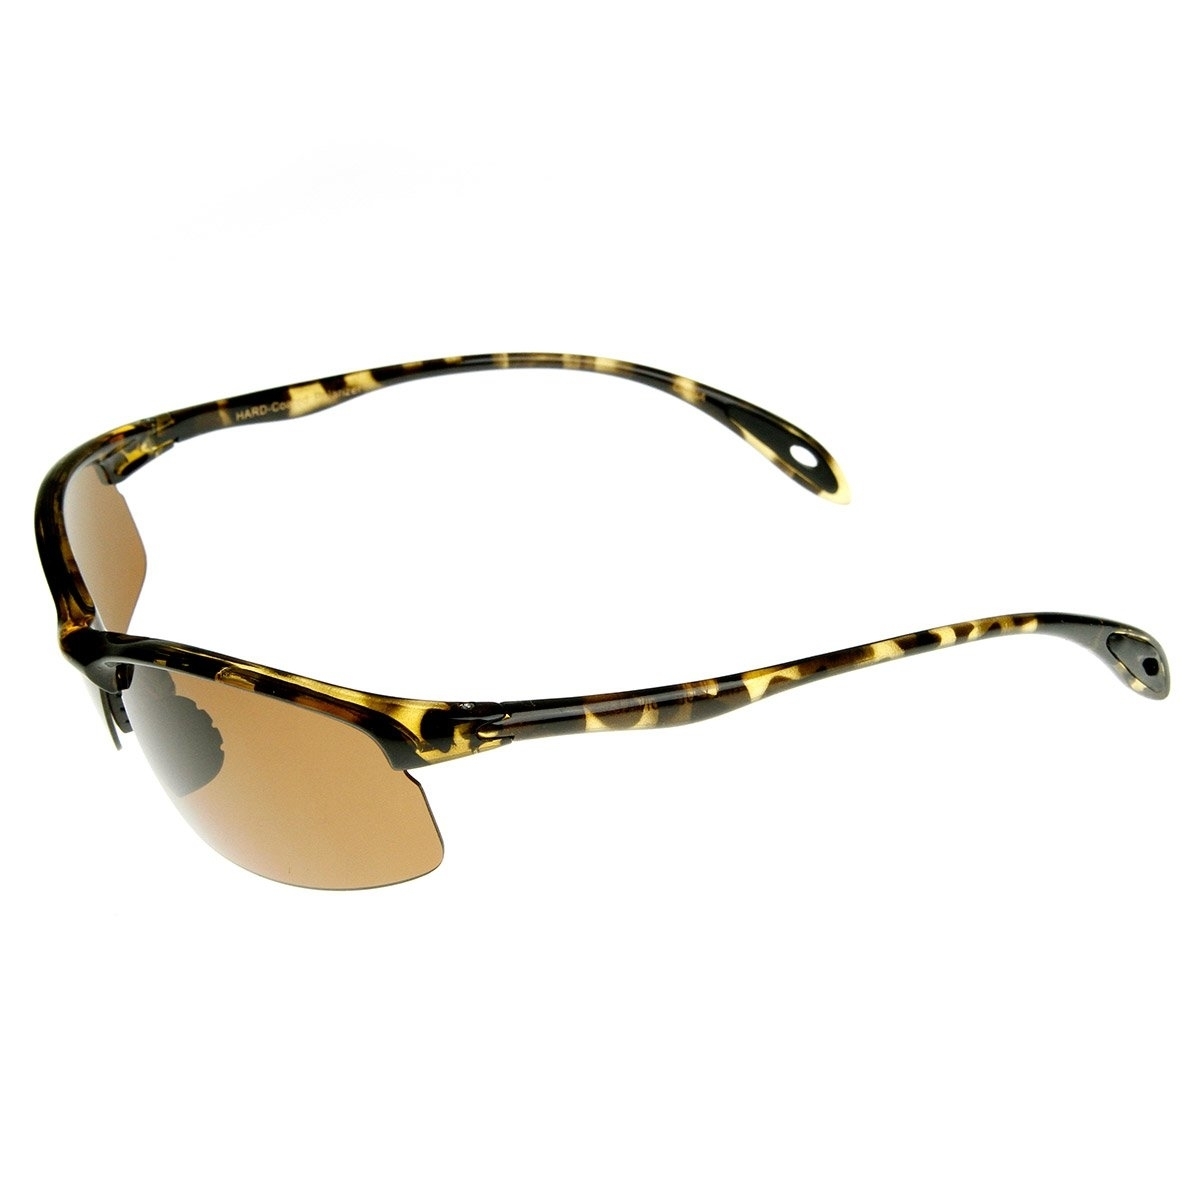 Polarized Half Frame Lightweight Action Sports Sunglasses - Black Green